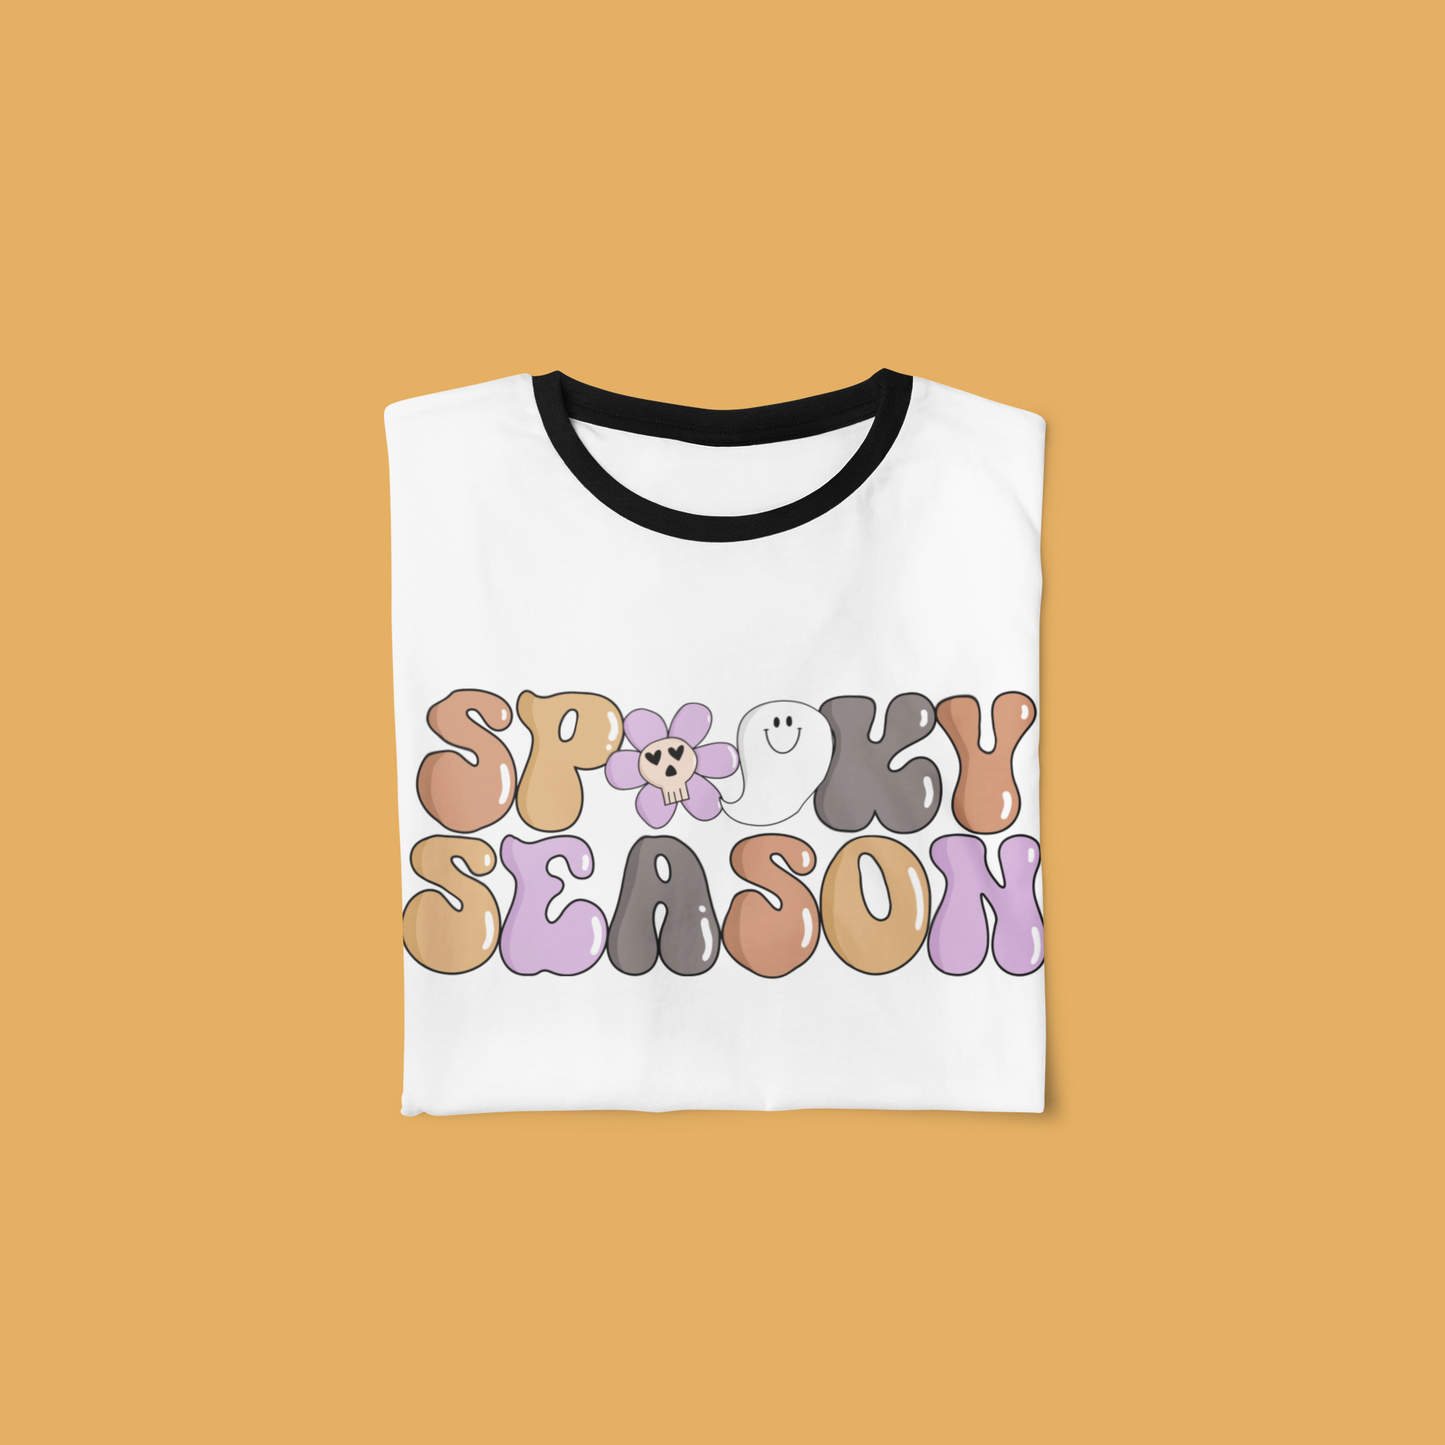 Spooky Season Groovy Shirt Design SVG